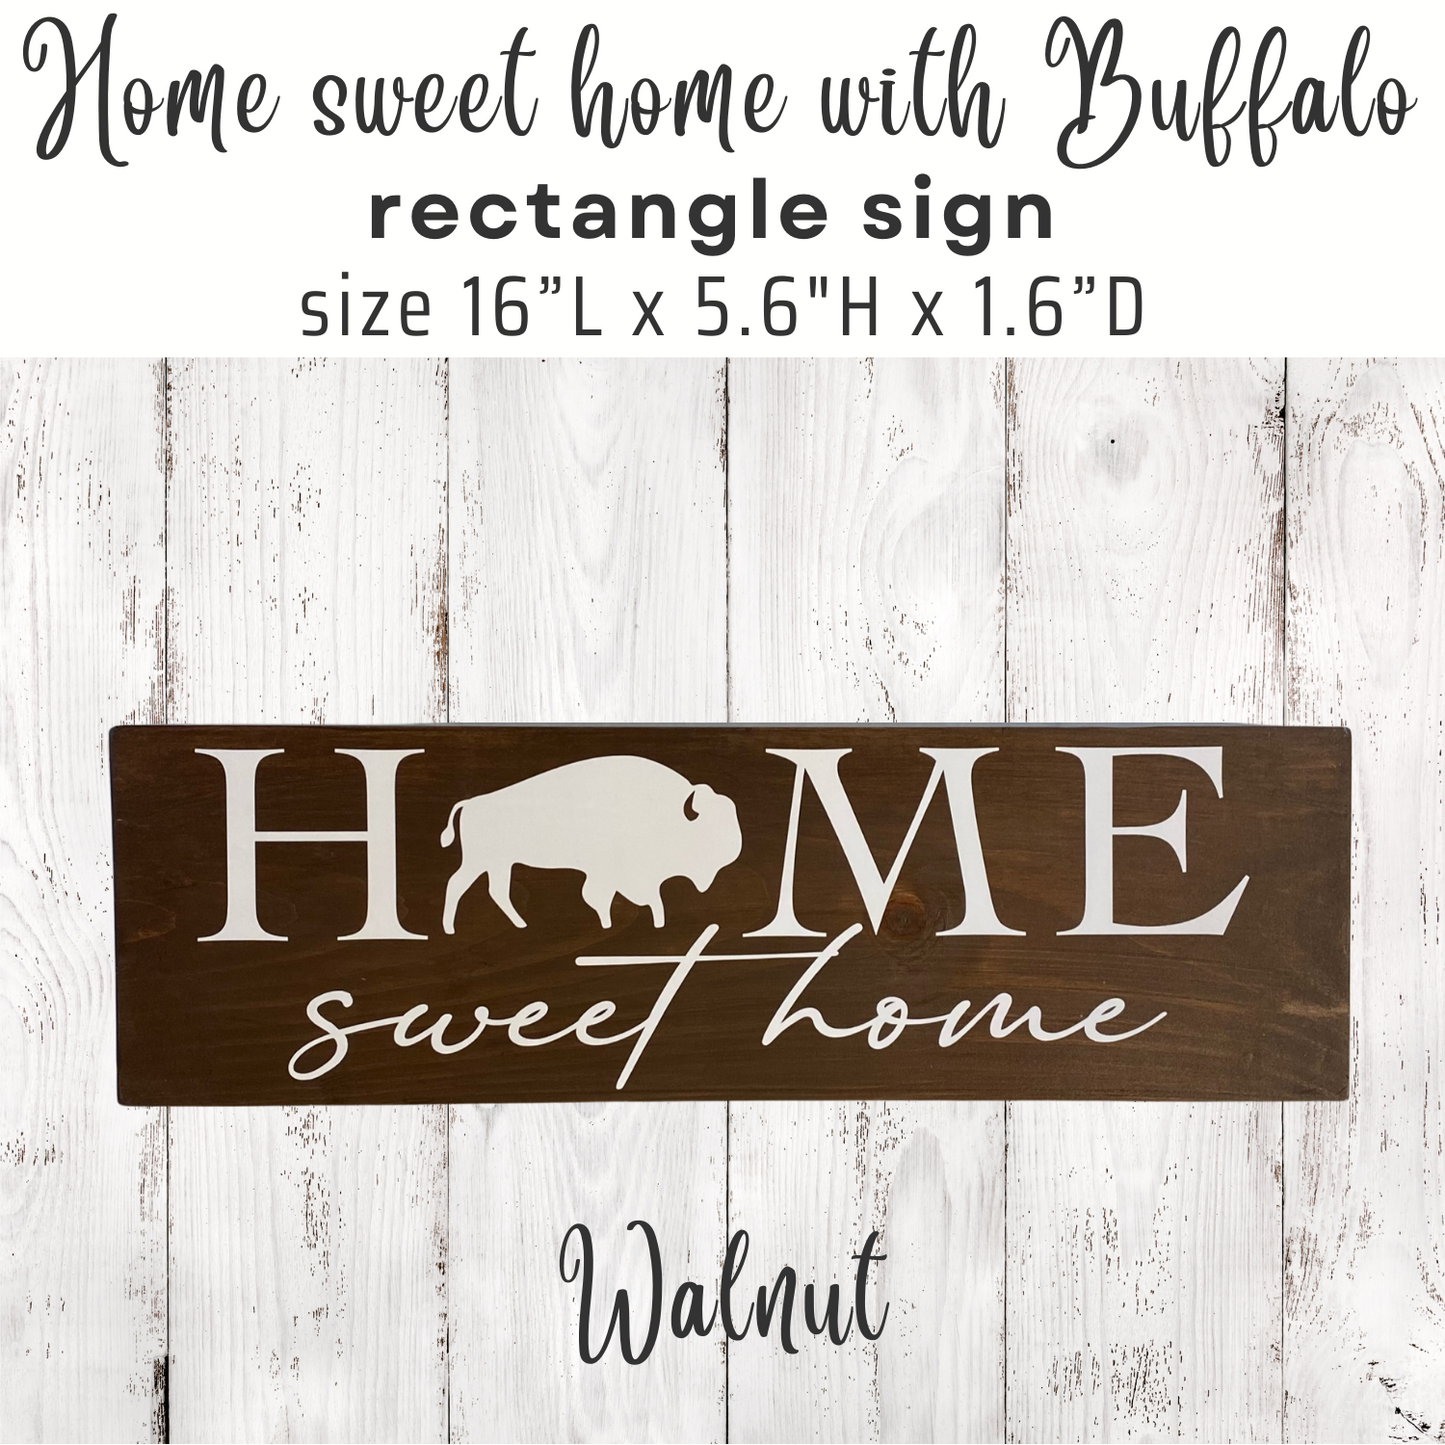 home sweel home wood sign with buffalo